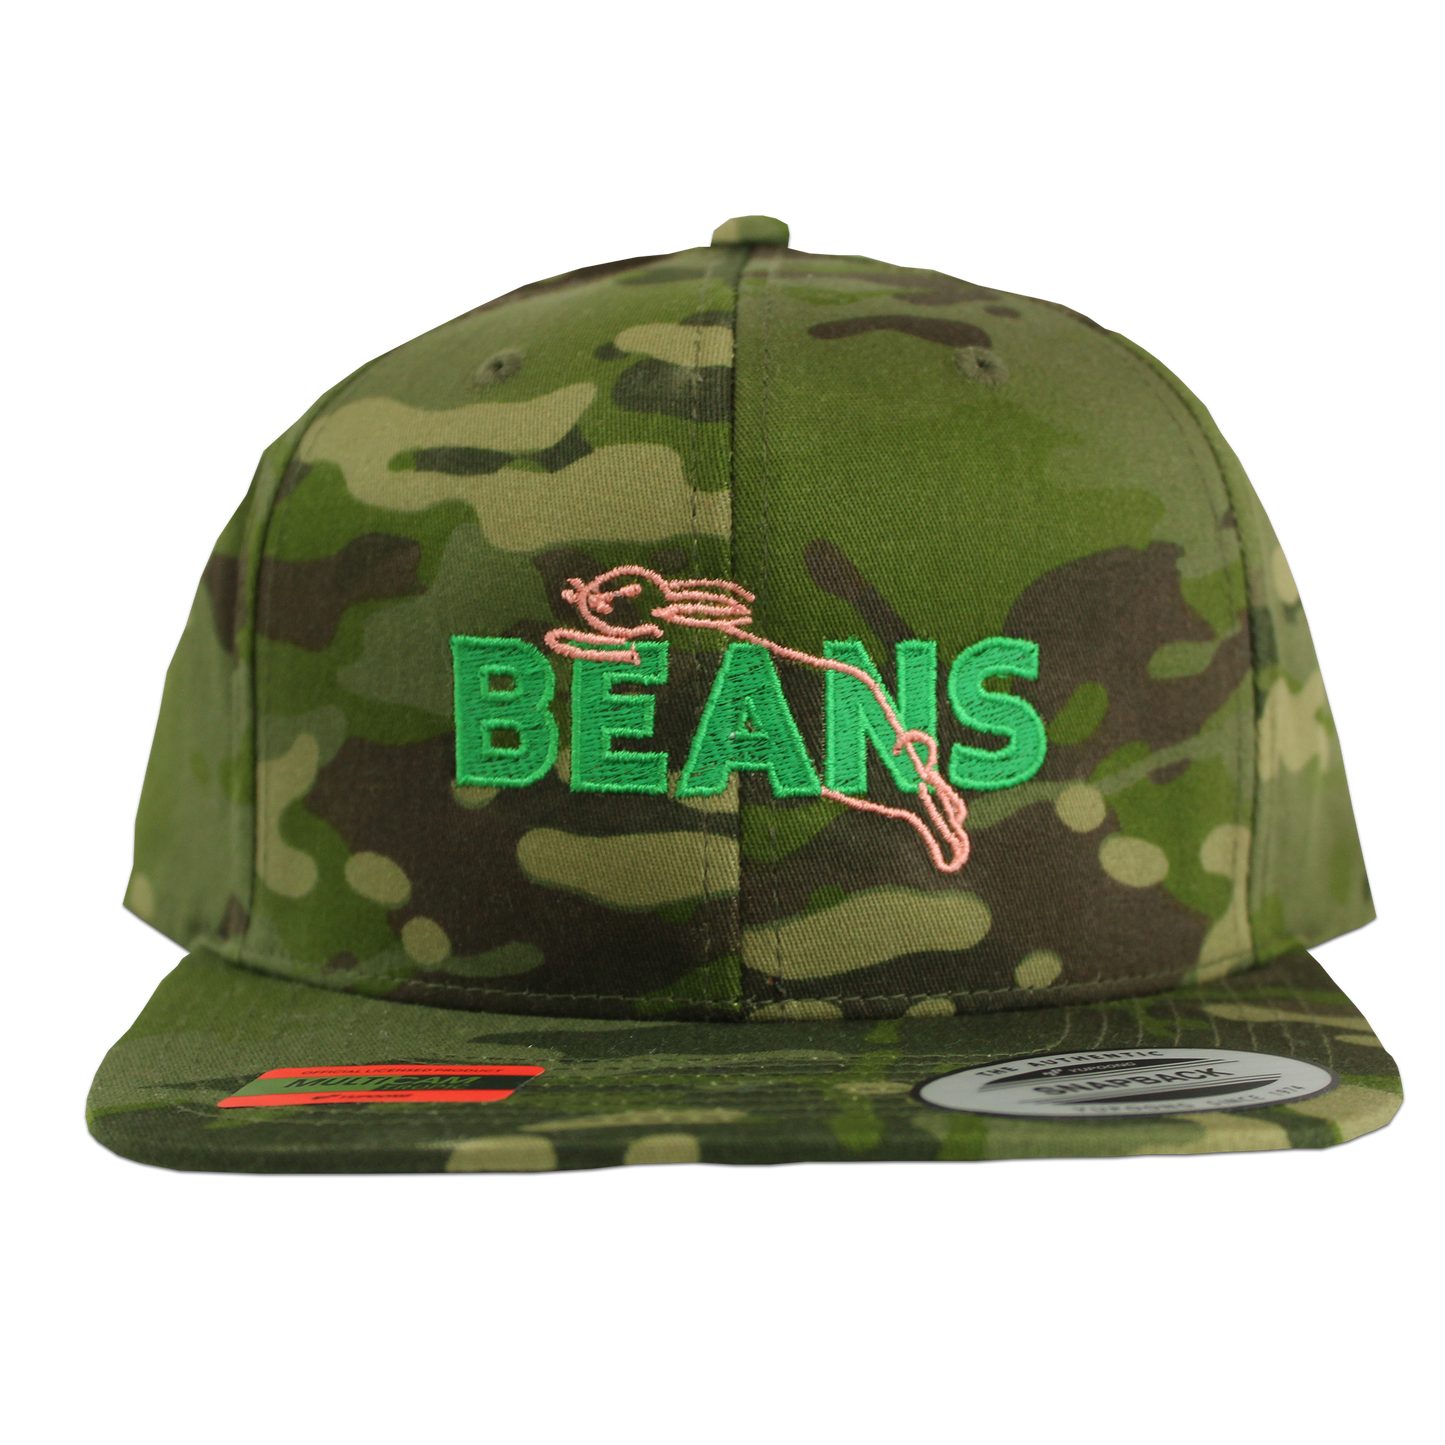 Beans Snapback - Multi Camo Woodland